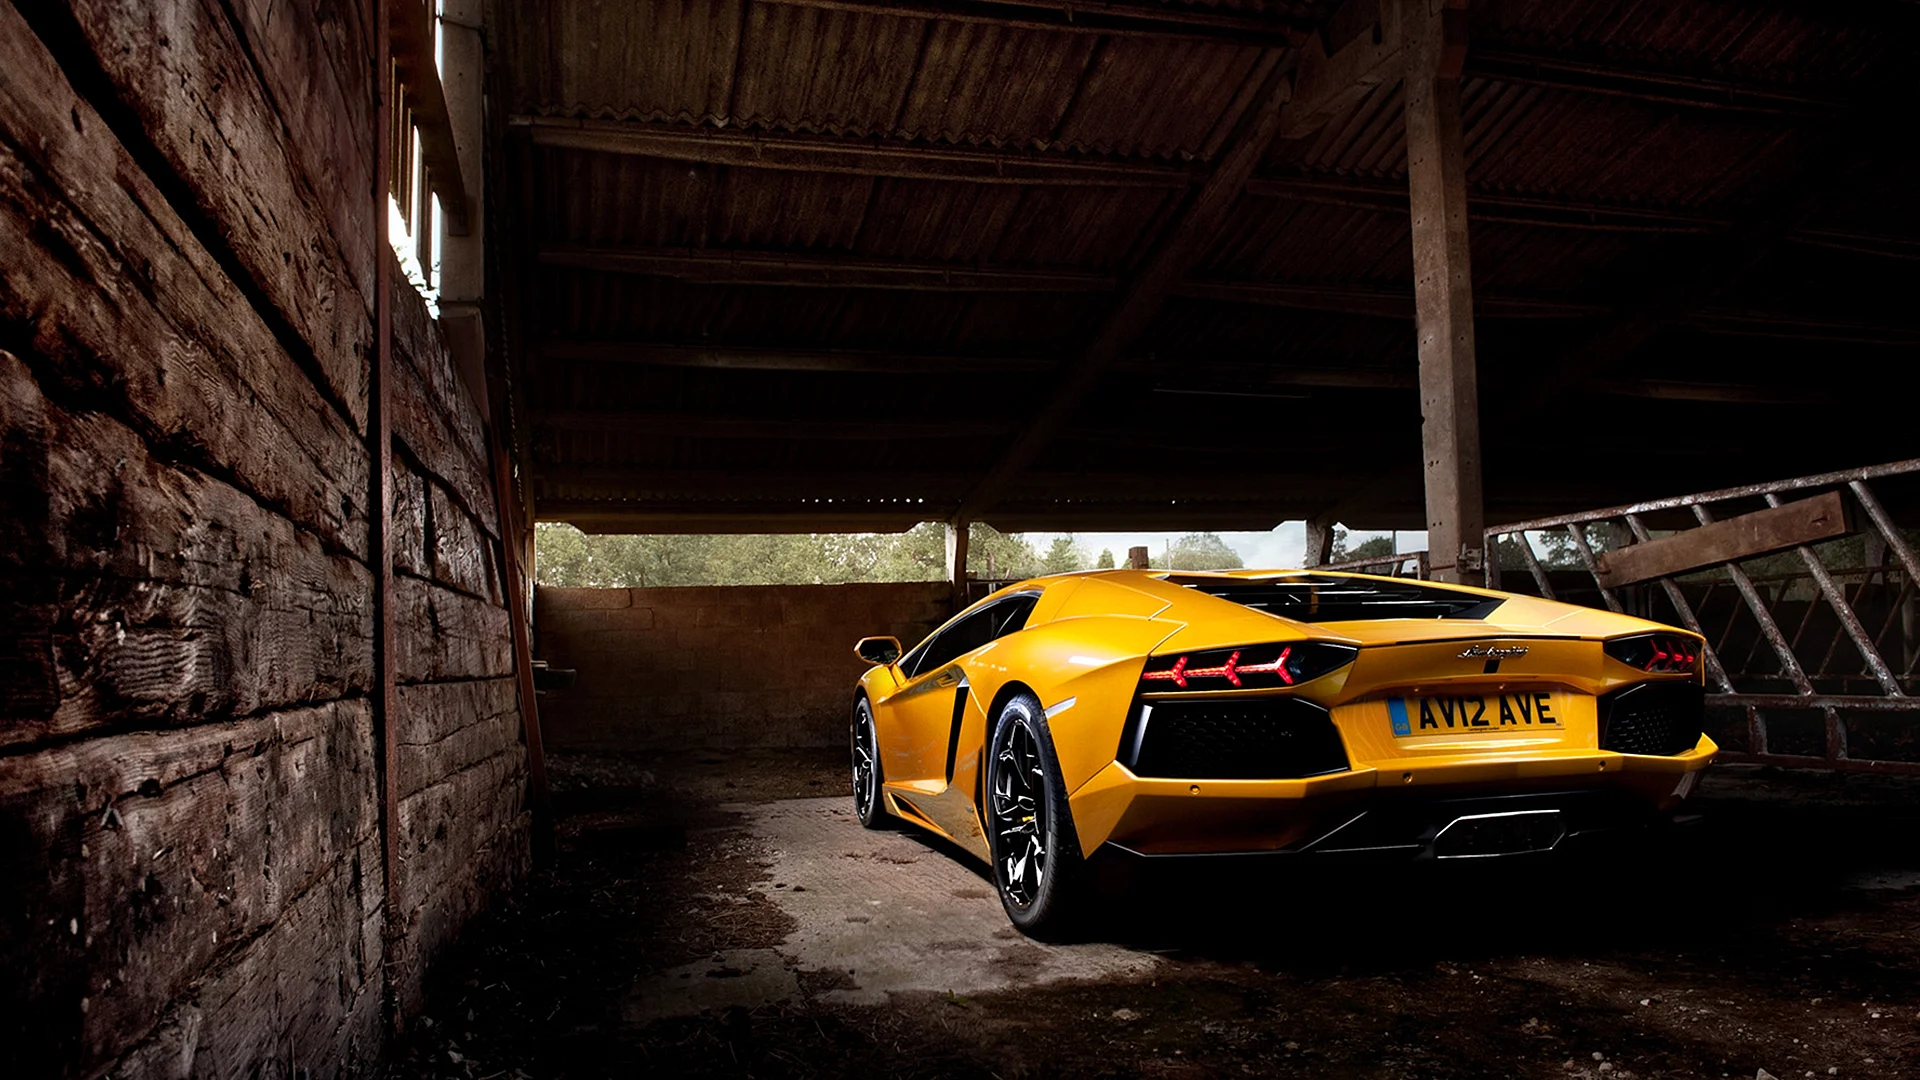 Yellow Lamborghini Wallpaper